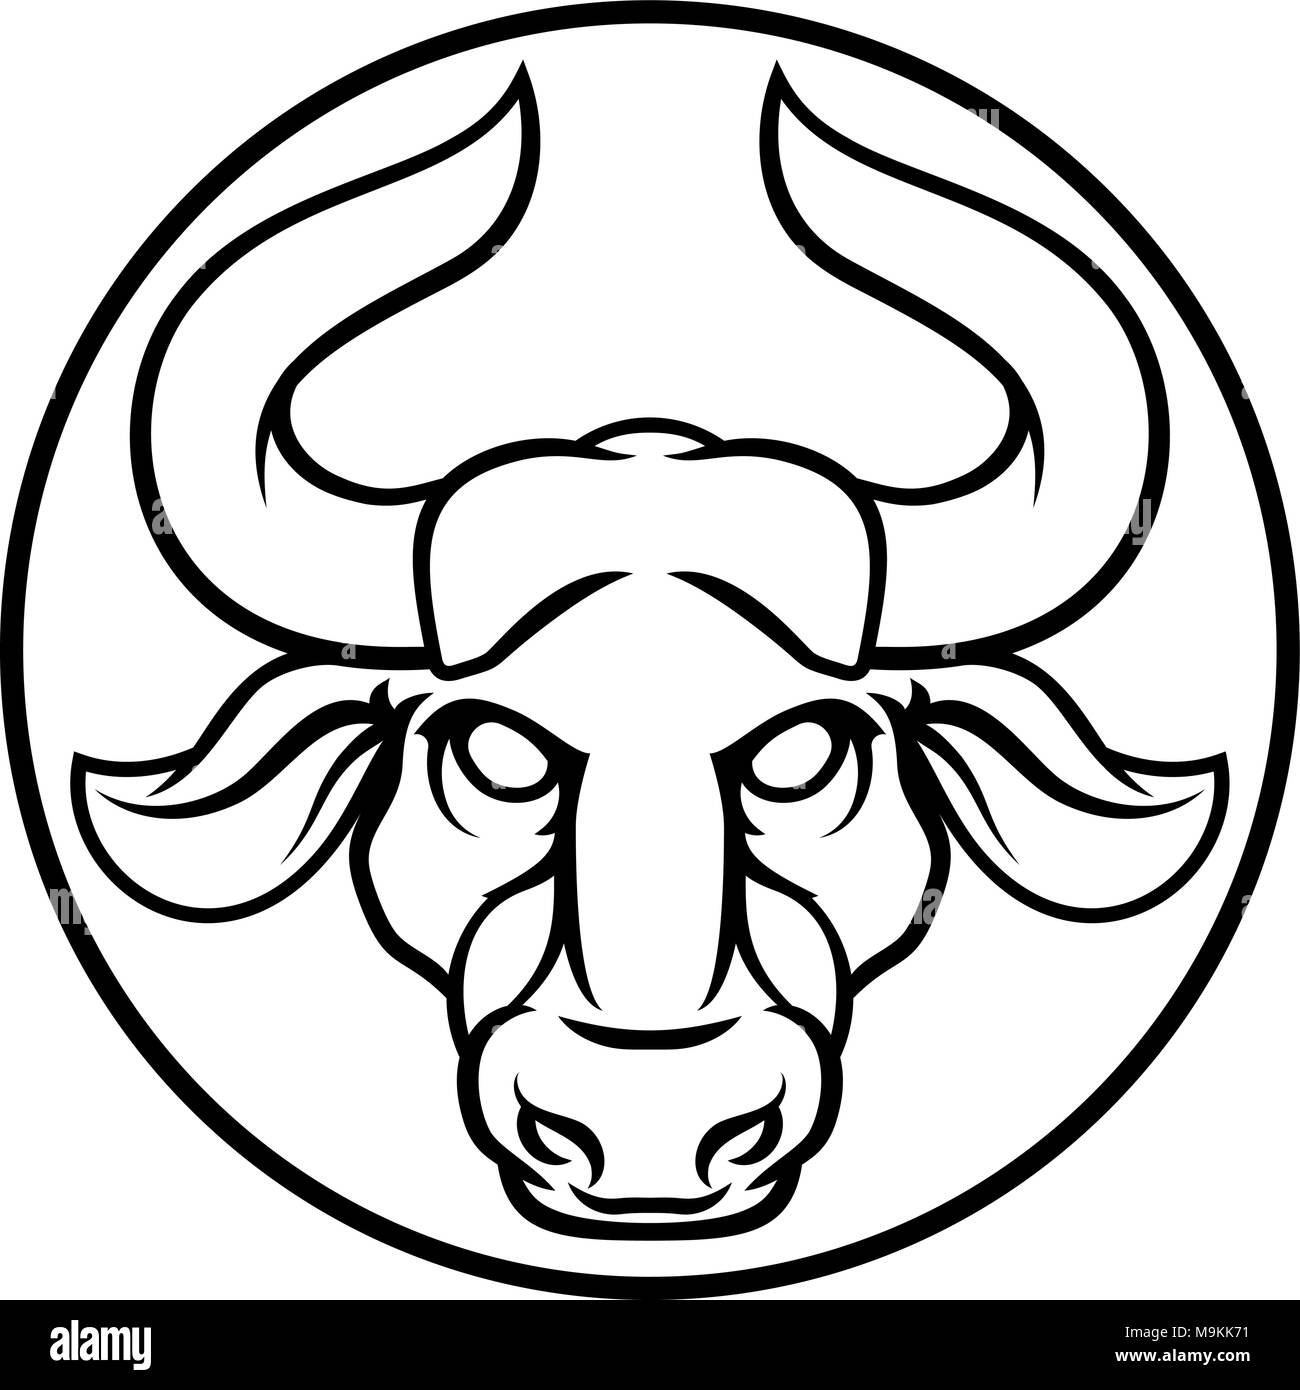 Taurus Bull Astrology Horoscope Zodiac Sign Stock Vector